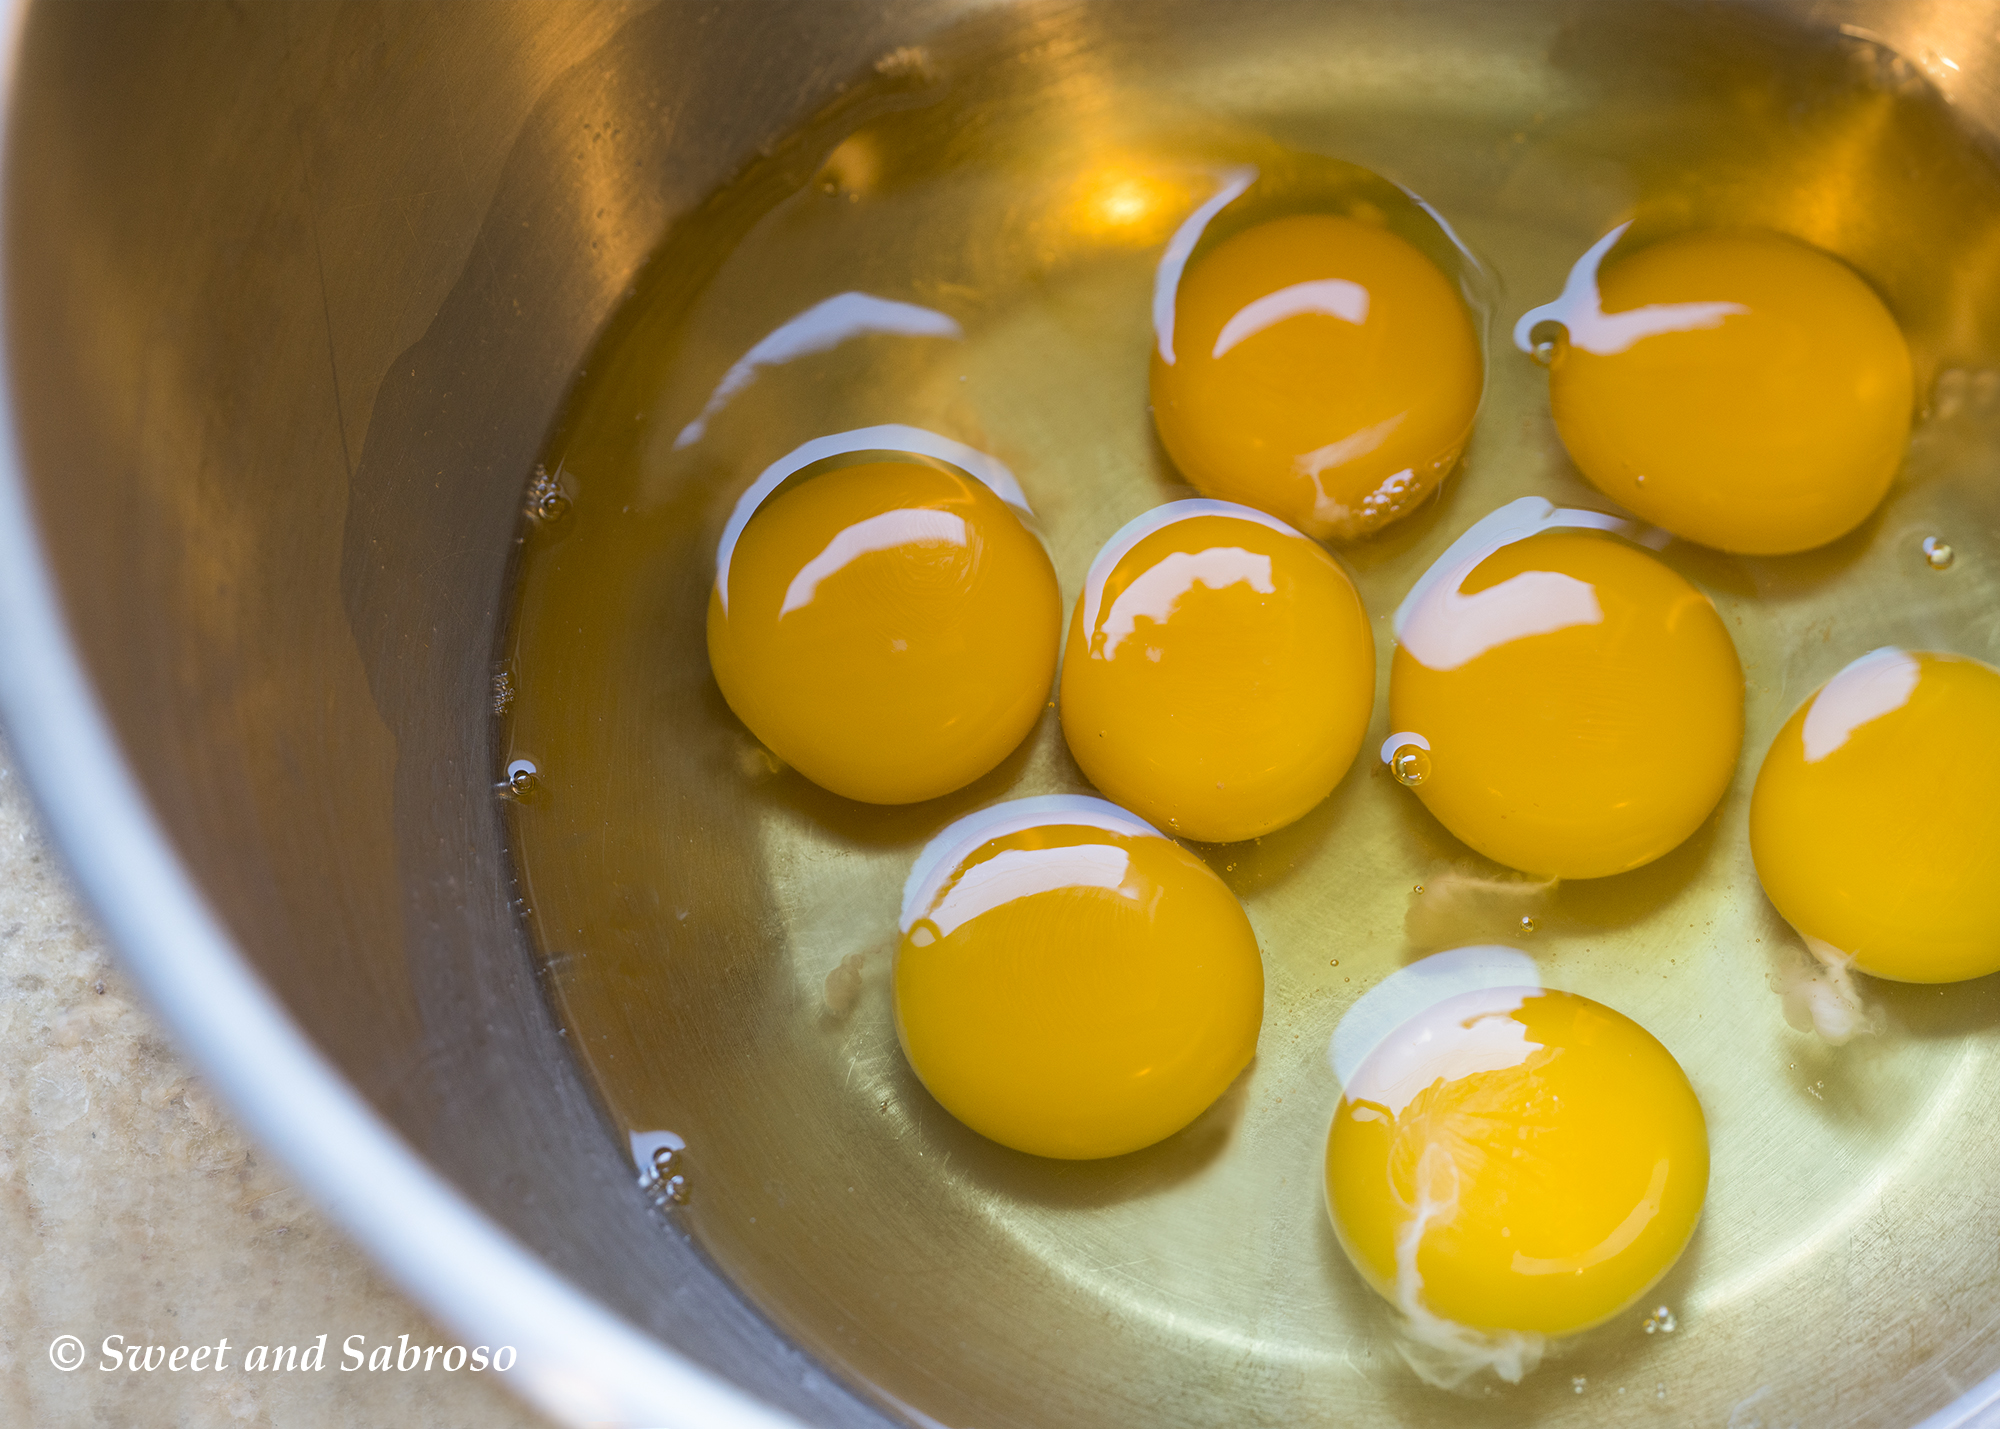 Bowl of Unbeaten Eggs to Make A Tortilla Española (Spanish Omelet)